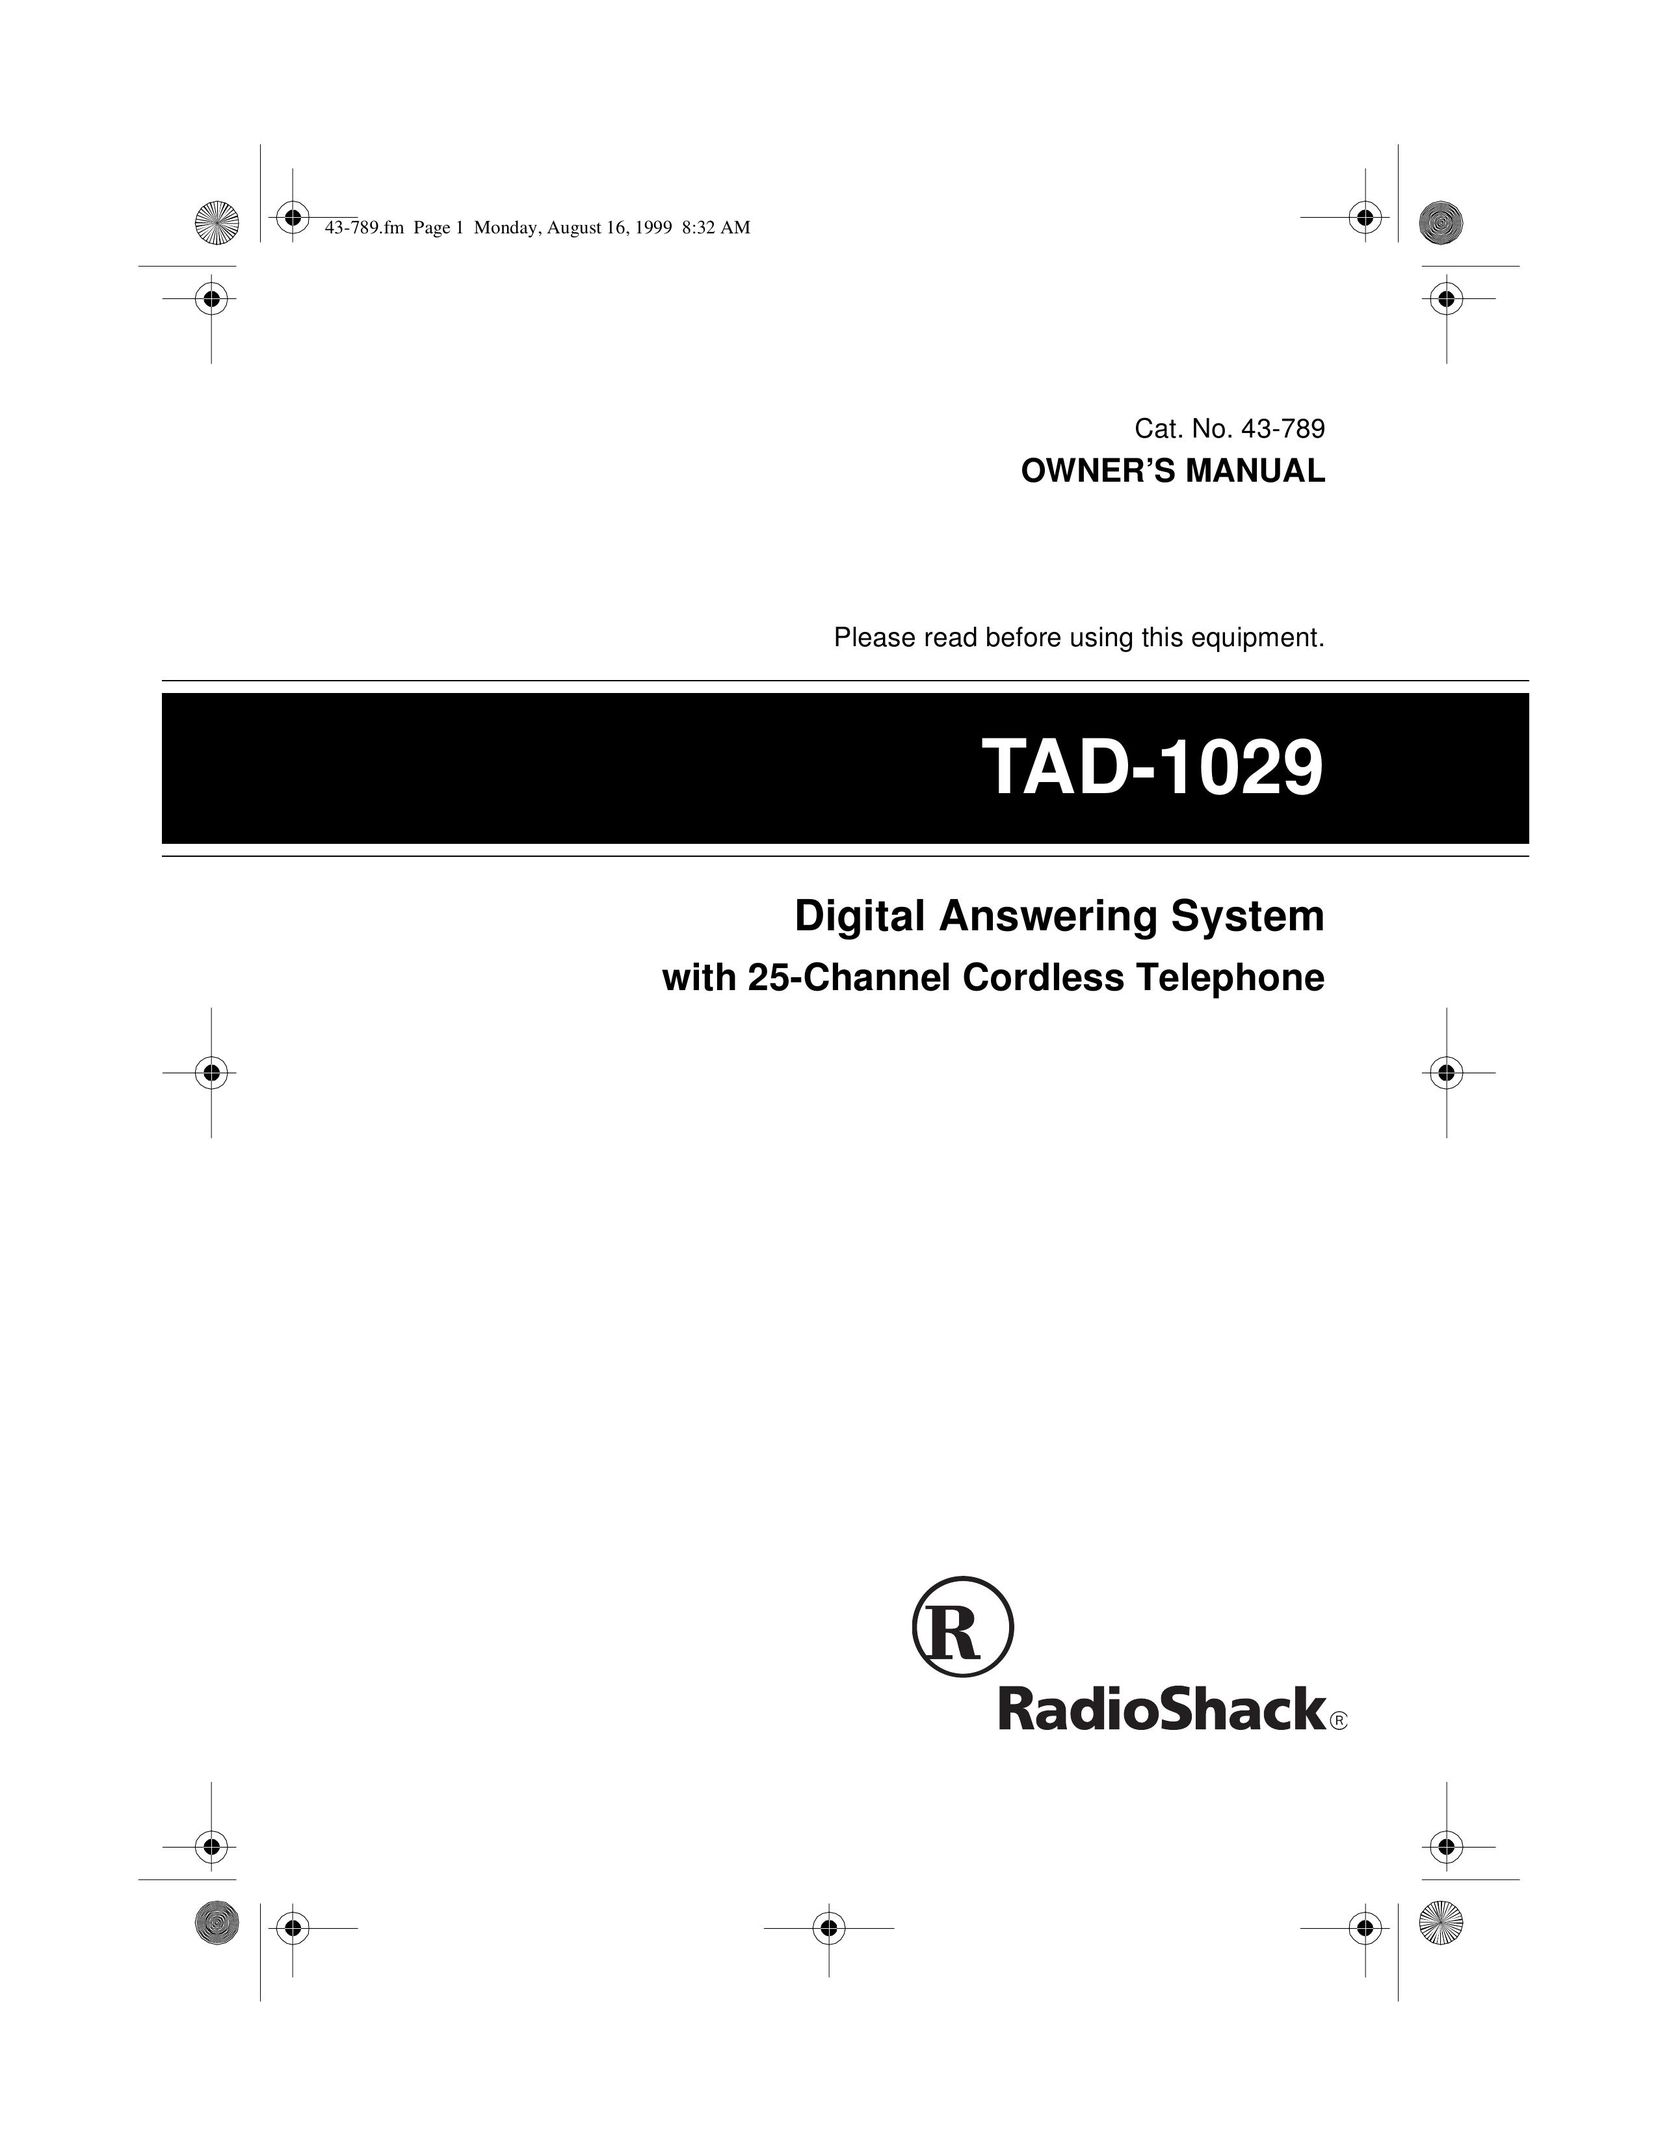 Radio Shack TAD-1029 Answering Machine User Manual